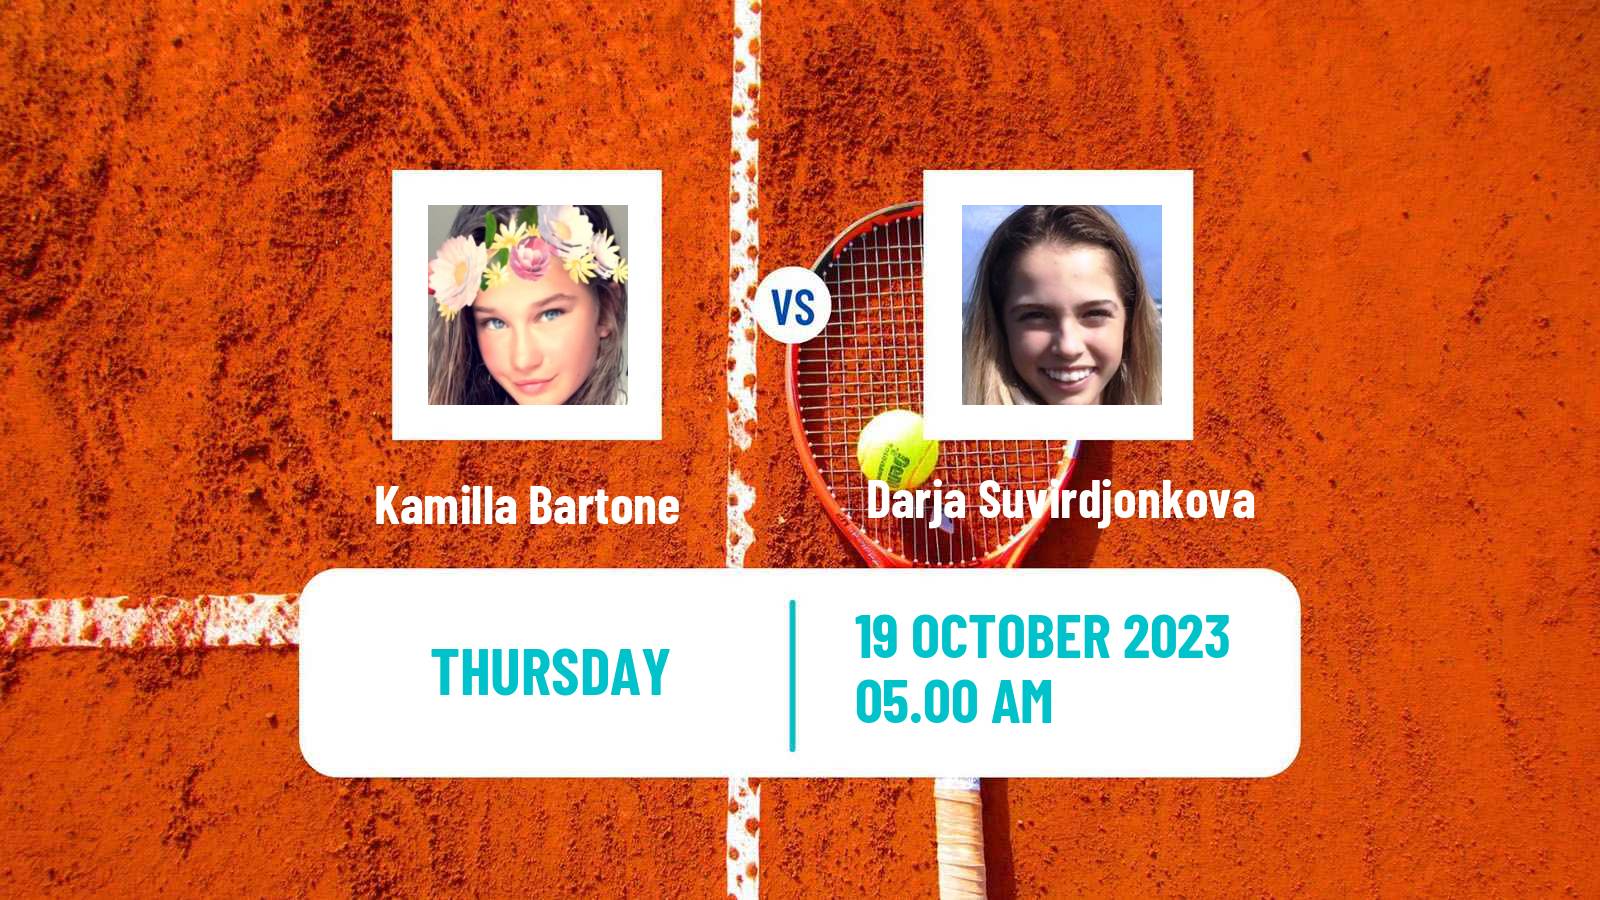 Tennis ITF W15 Sharm Elsheikh 15 Women Kamilla Bartone - Darja Suvirdjonkova